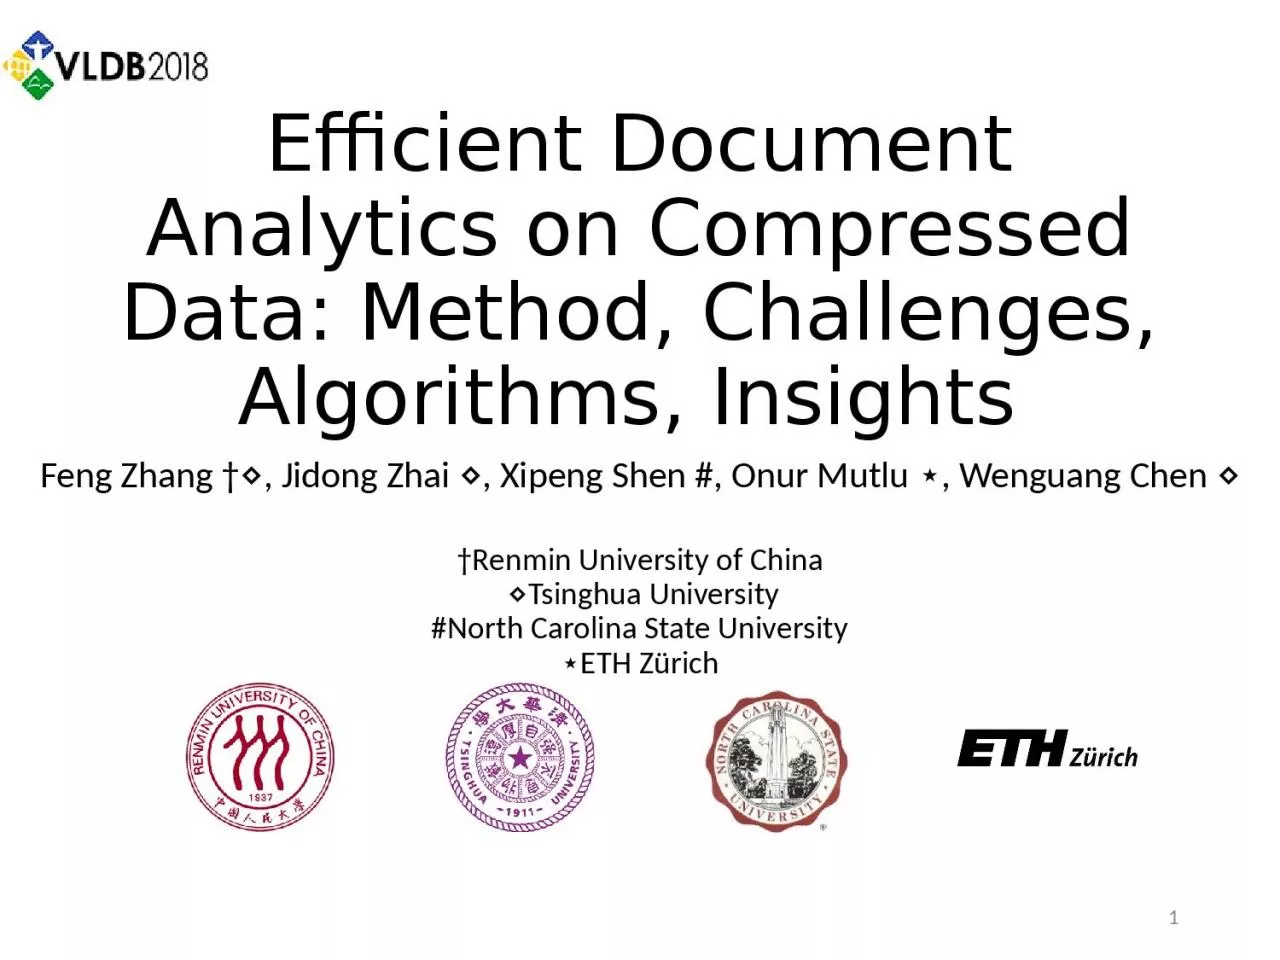 Efficient Document Analytics on Compressed Data: Method, Challenges, Algorithms, Insights